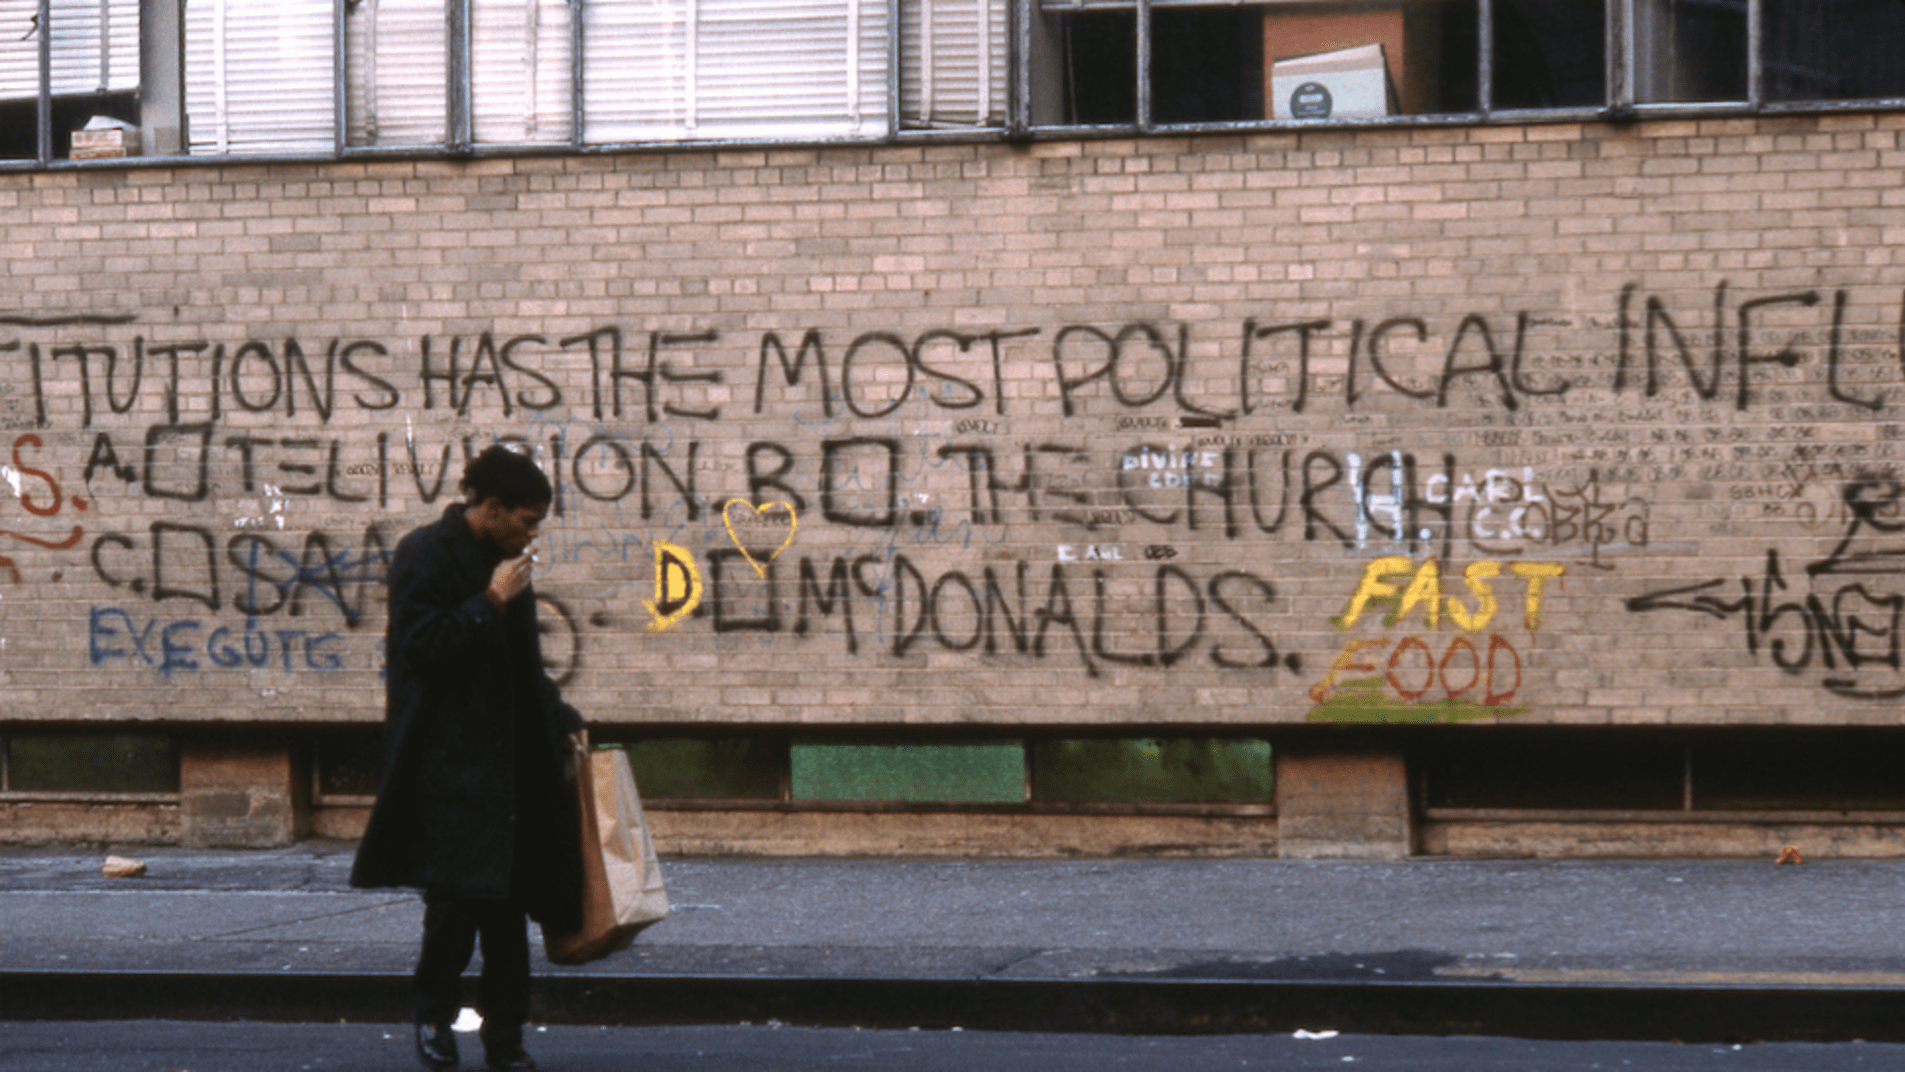 Jean-Michel Basquiat, second half of 1970s, New York